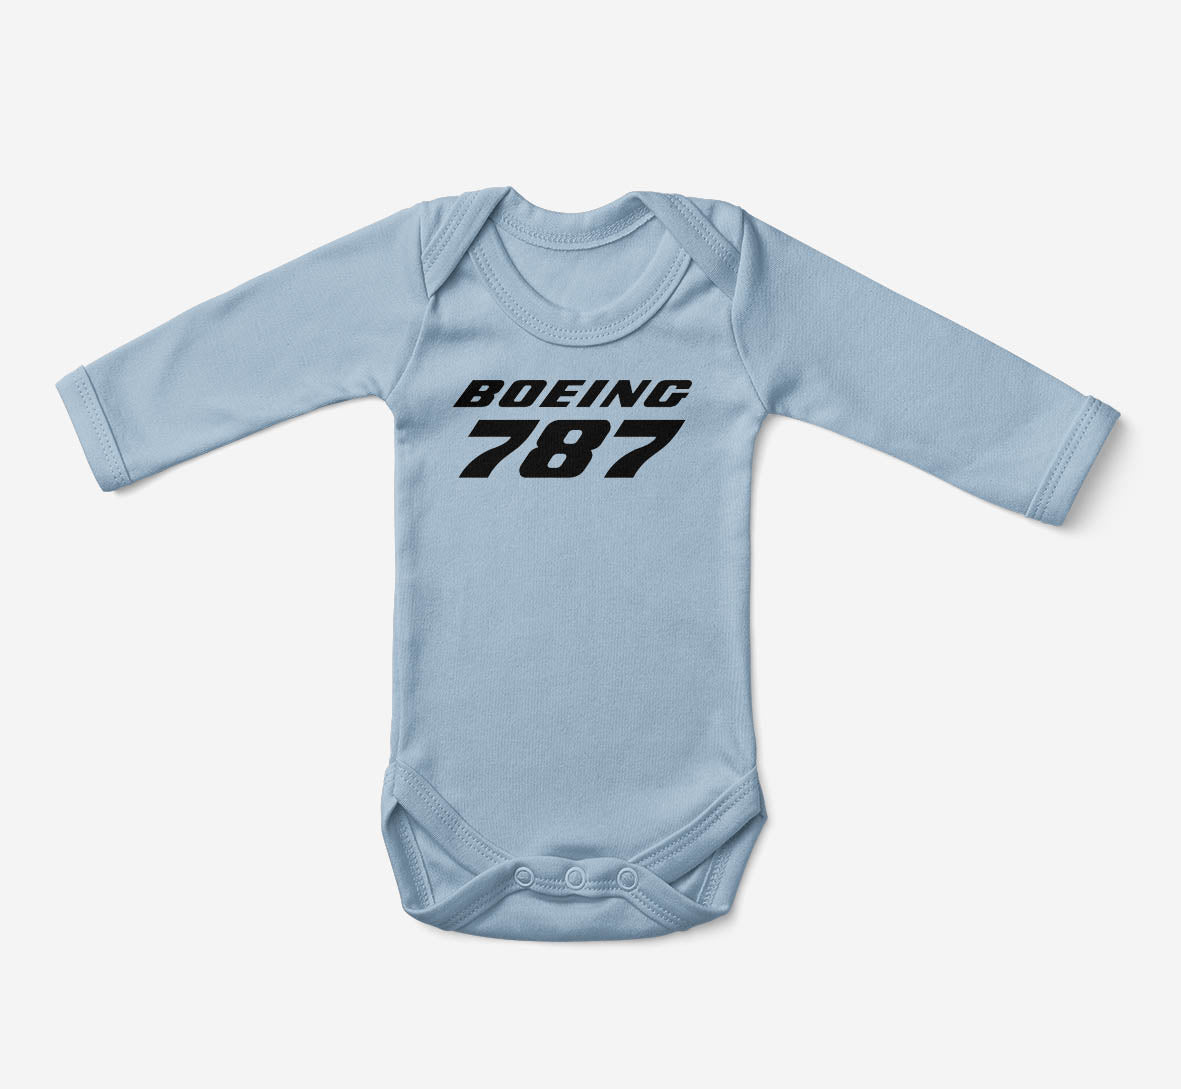 Boeing 787 & Text Designed Baby Bodysuits